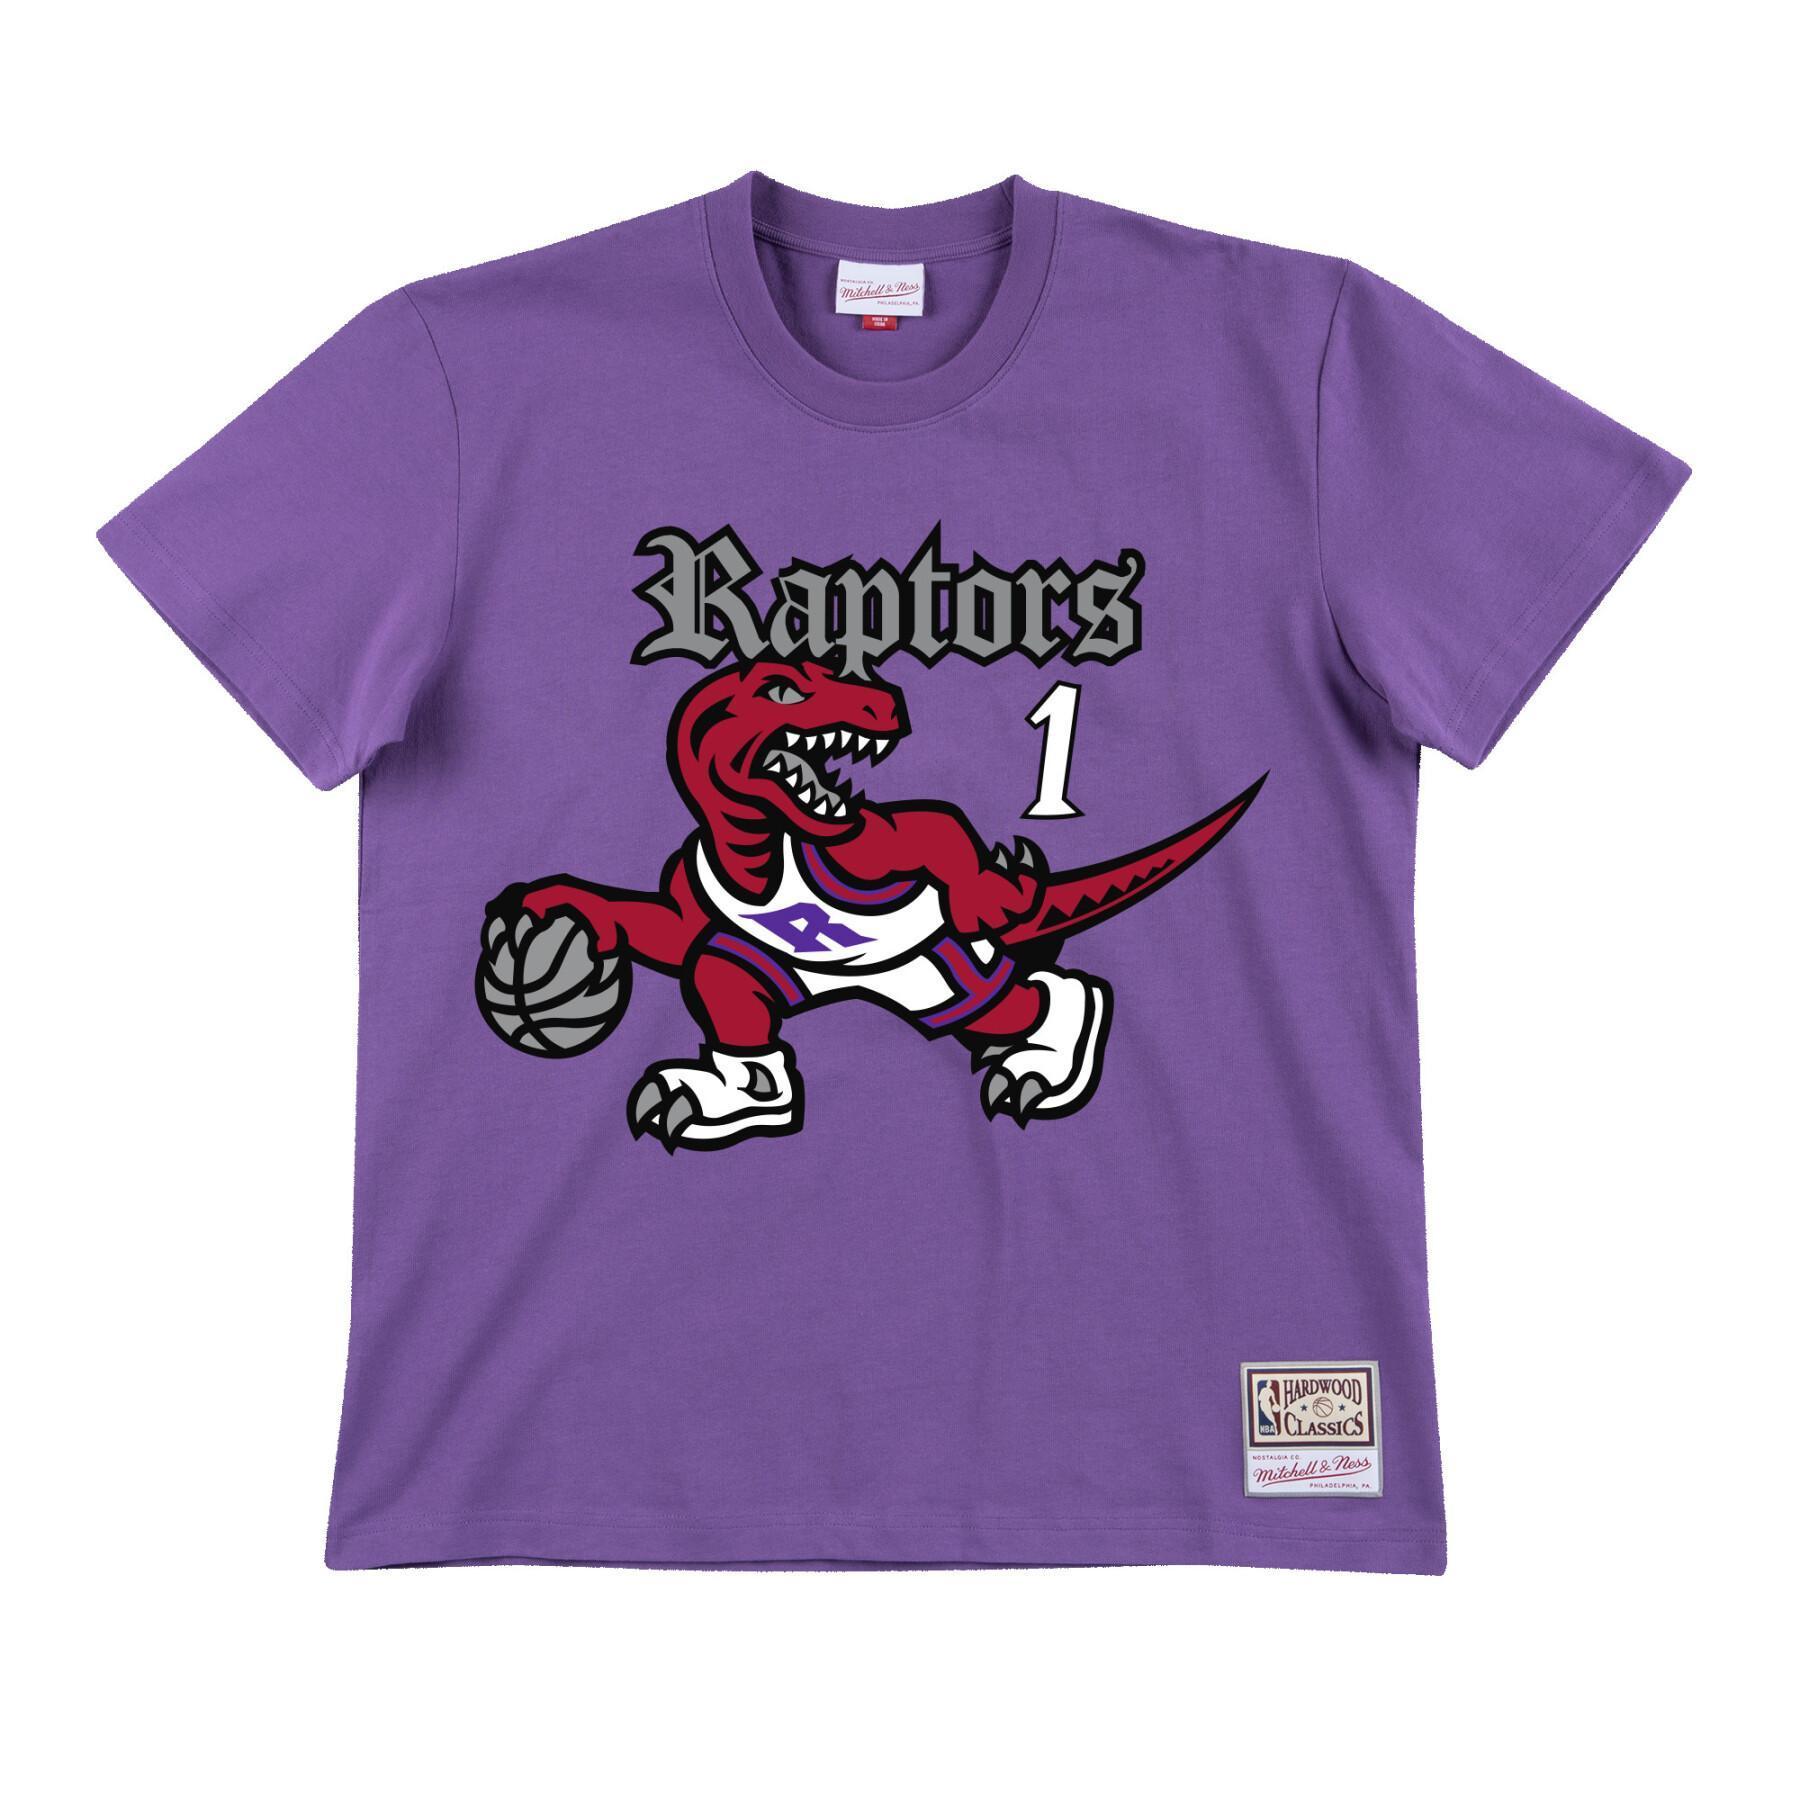 Camiseta Toronto Raptors nba old english